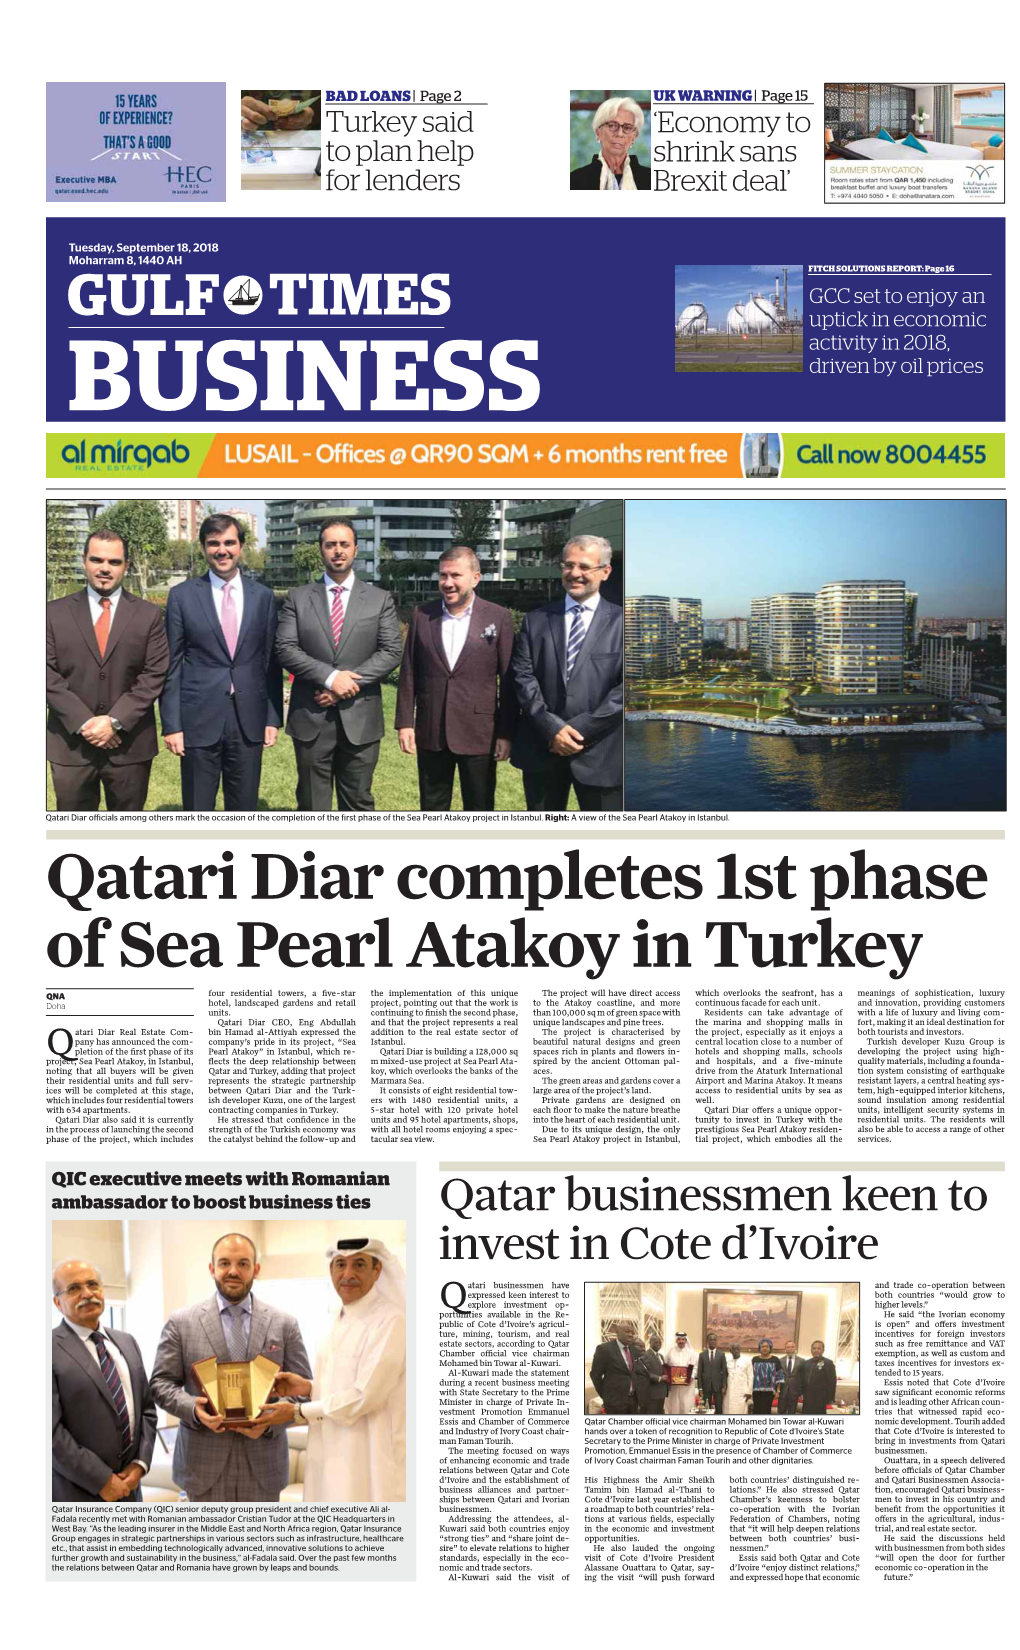 Qatari Diar Completes 1St Phase of Sea Pearl Atakoy in Turkey